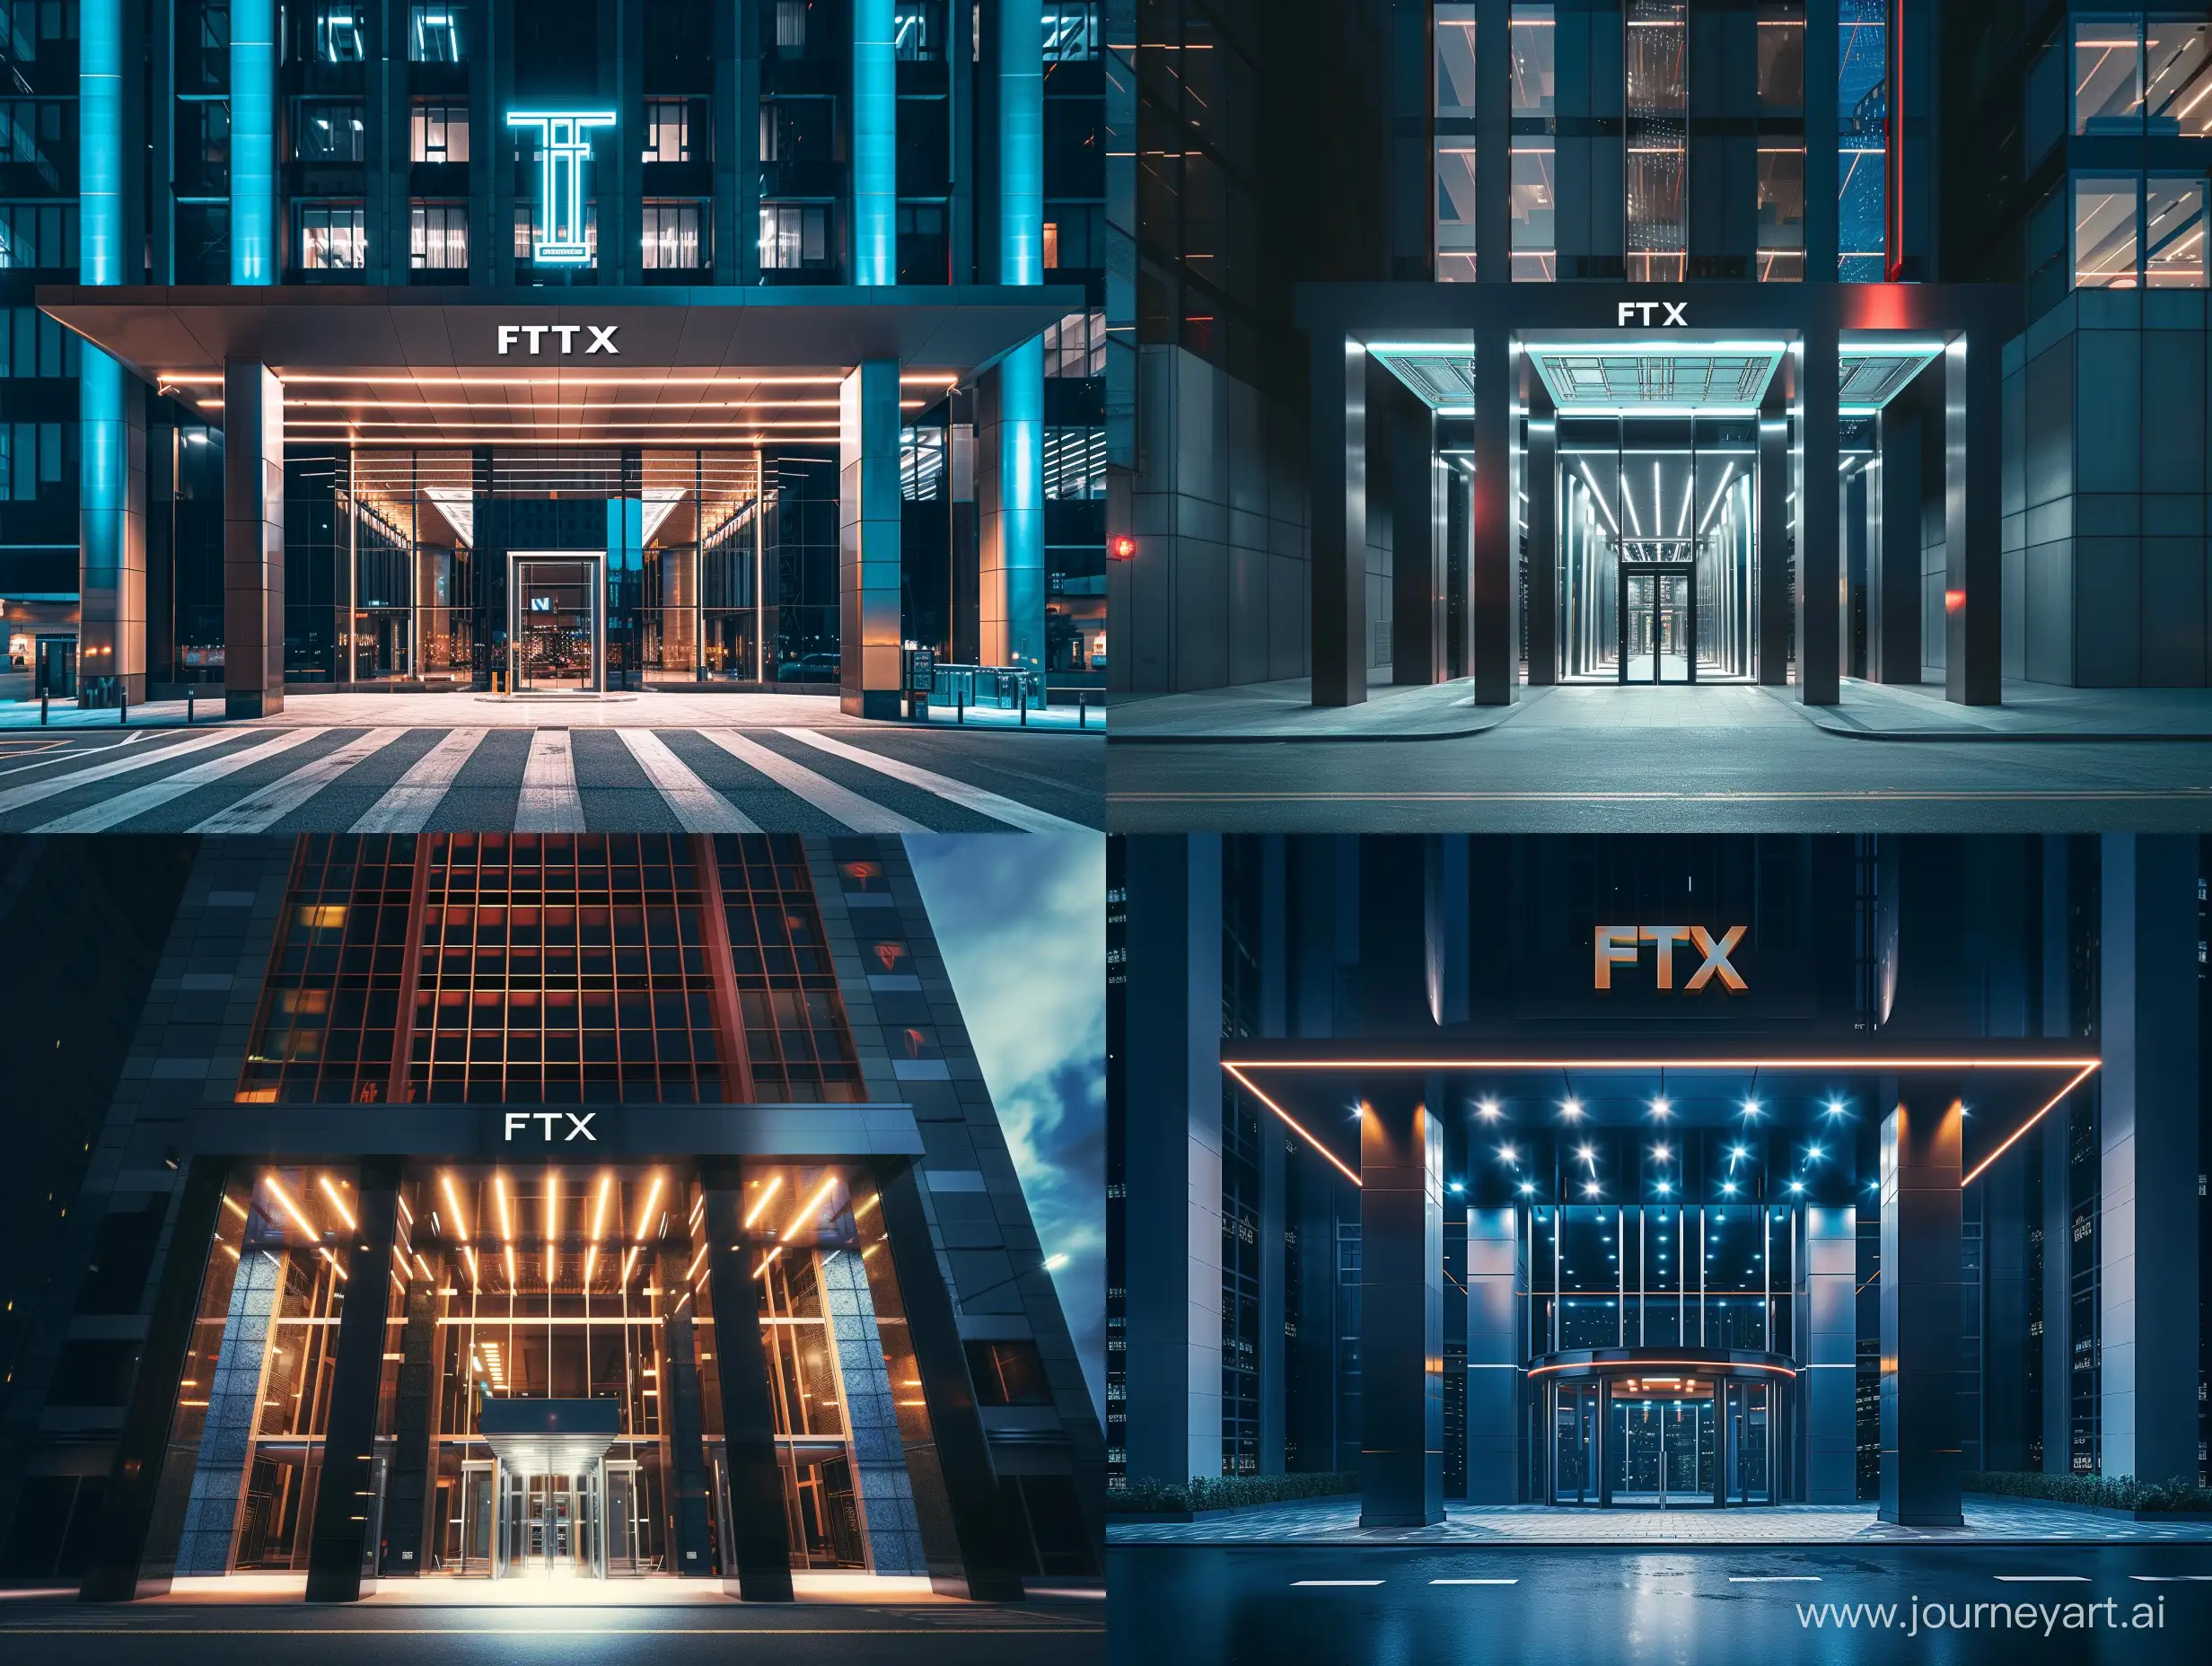 FTX-Skyscraper-Office-Building-Illuminated-Night-View